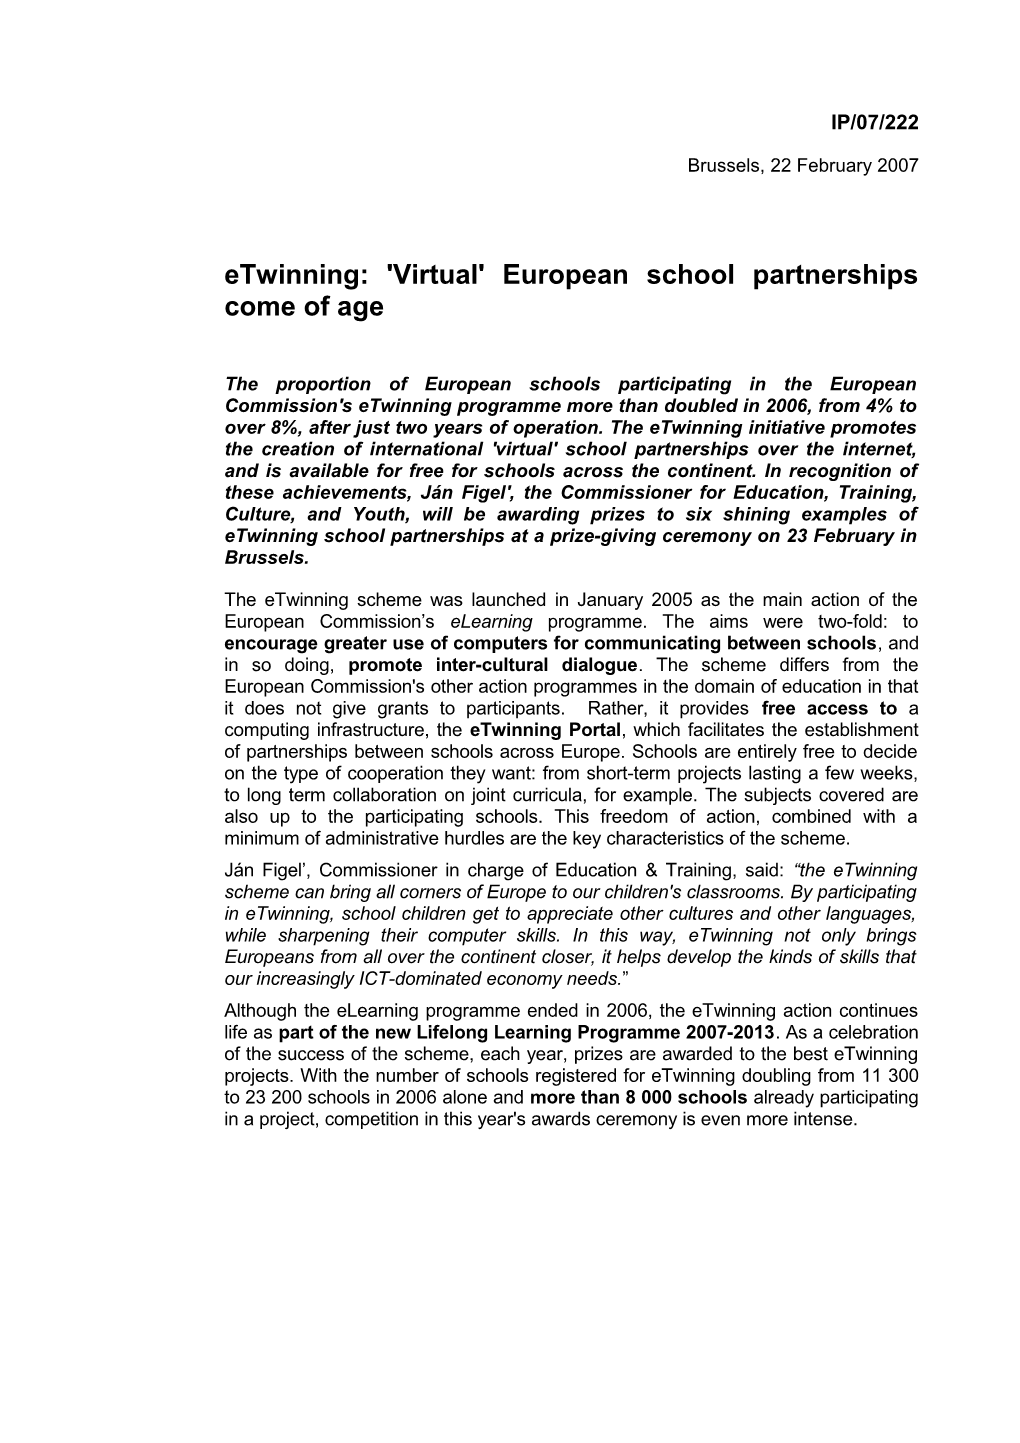 Etwinning: 'Virtual'european School Partnerships Come of Age